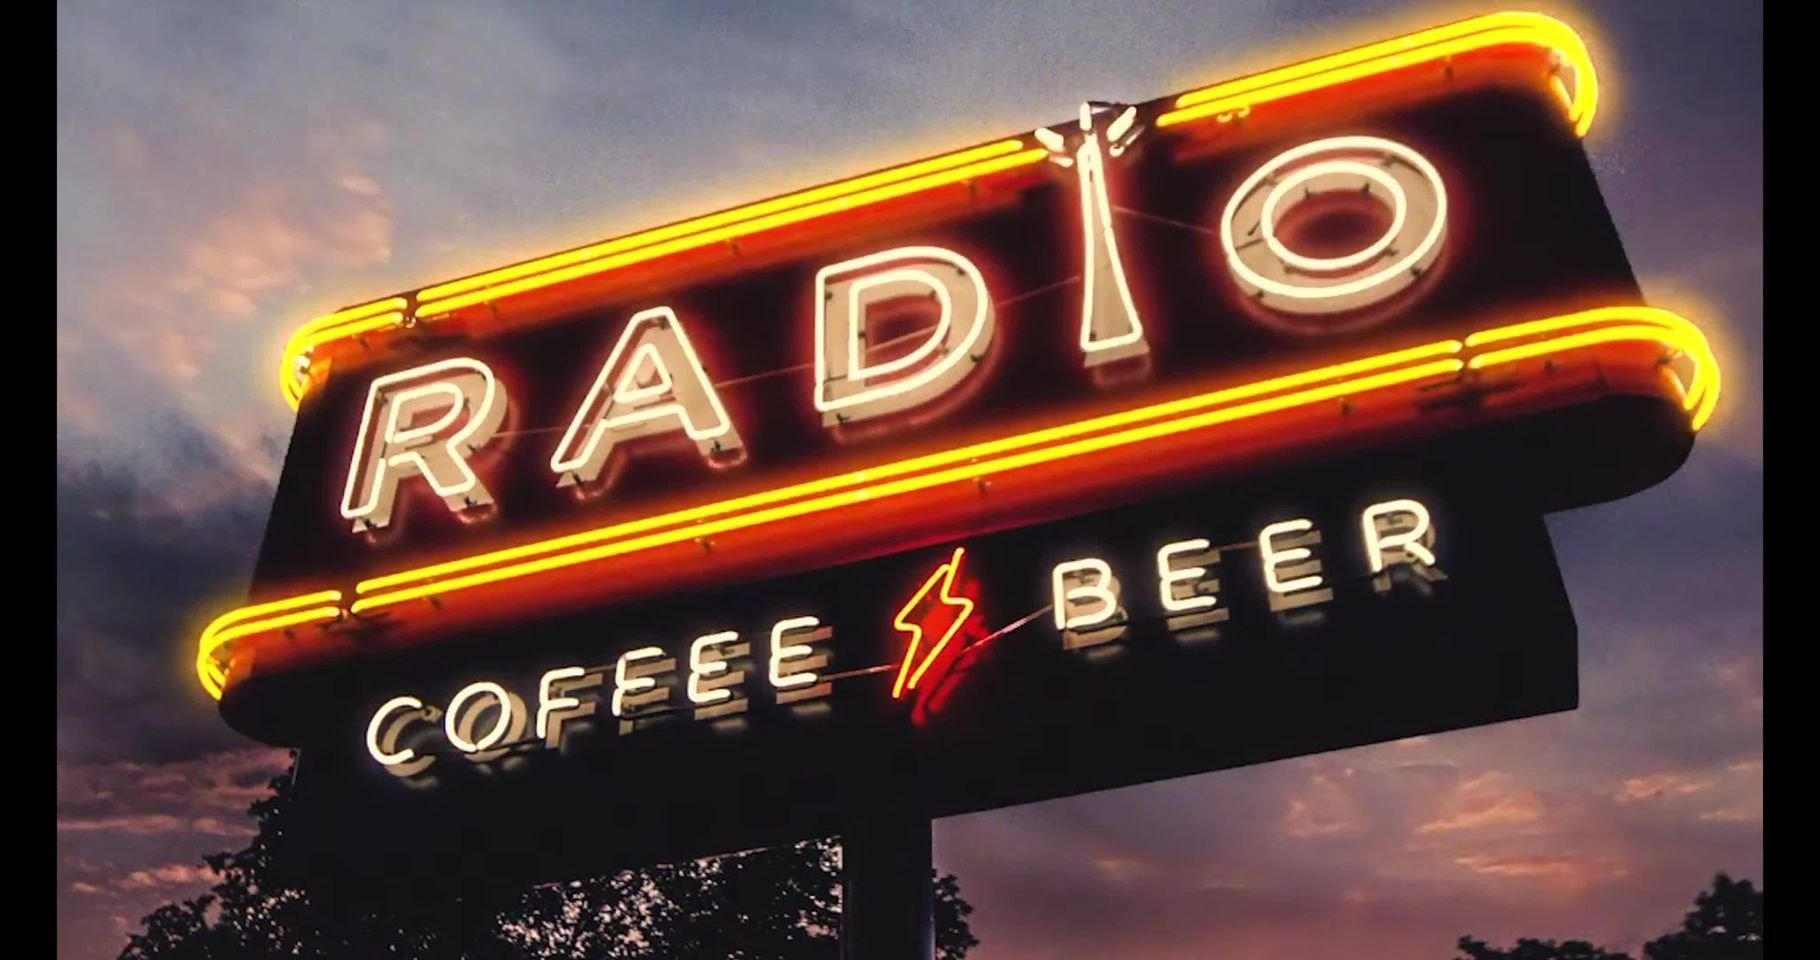 Radio Coffee & Beer